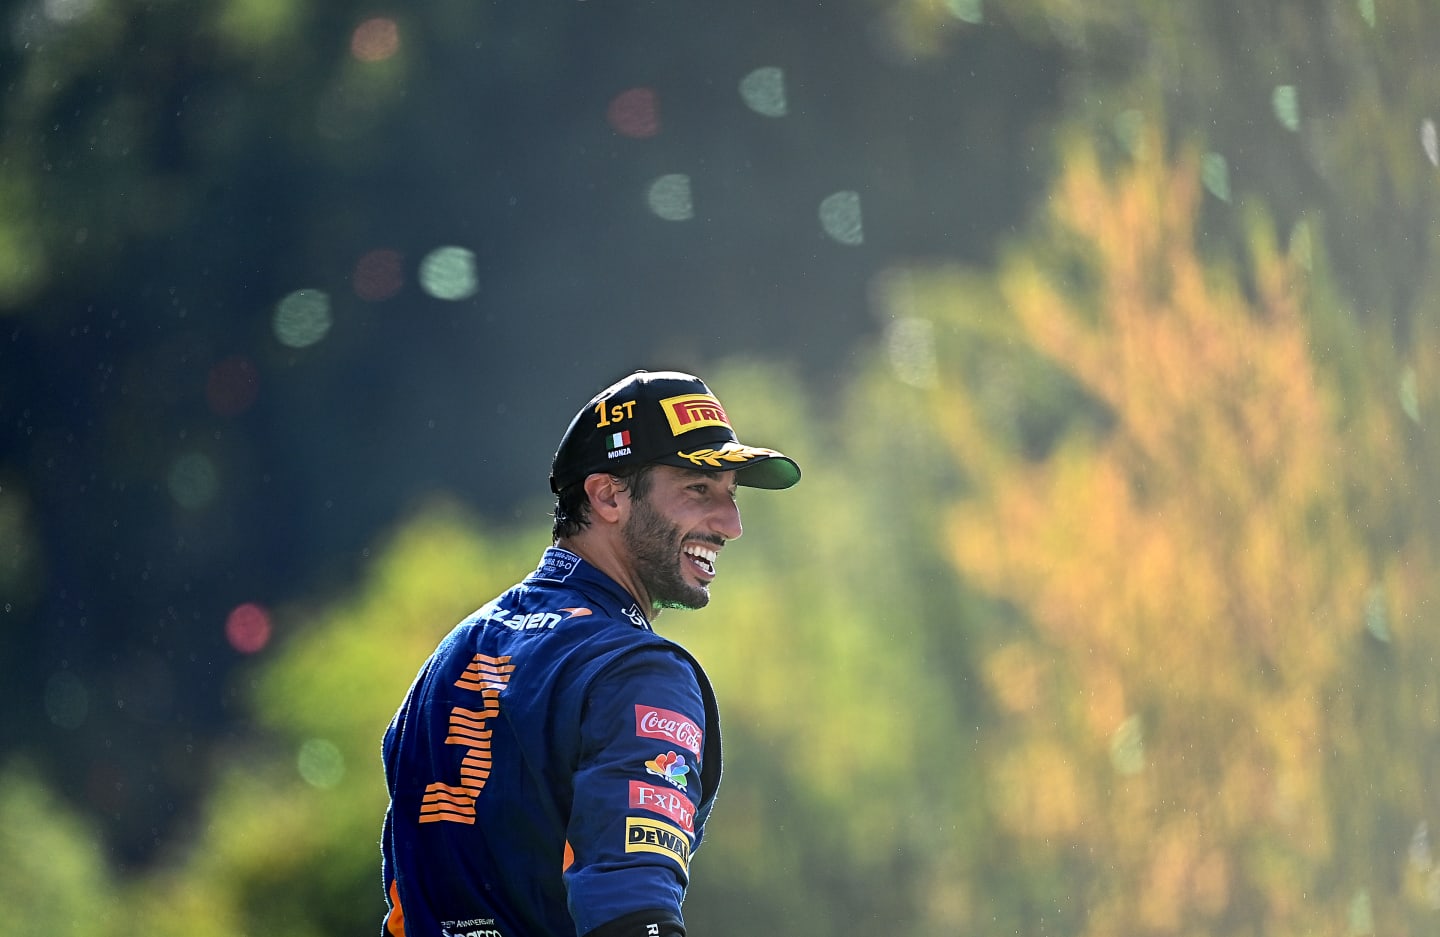 MONZA, ITALY - SEPTEMBER 12: Race winner Daniel Ricciardo of Australia and McLaren F1 celebrates on